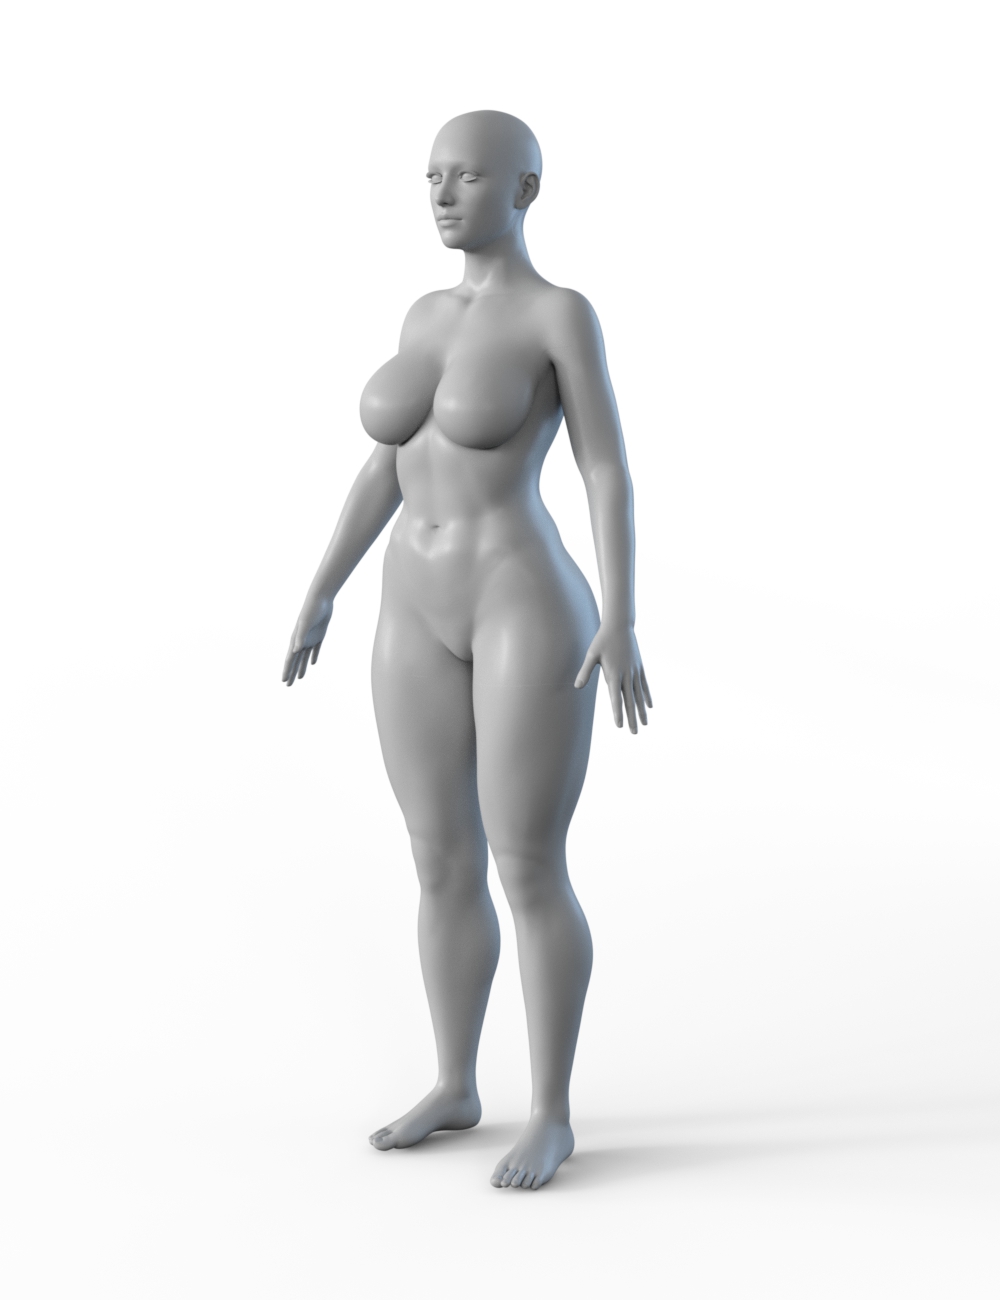 FBX- Base Female Maxi Dress Outfit by: Paleo, 3D Models by Daz 3D